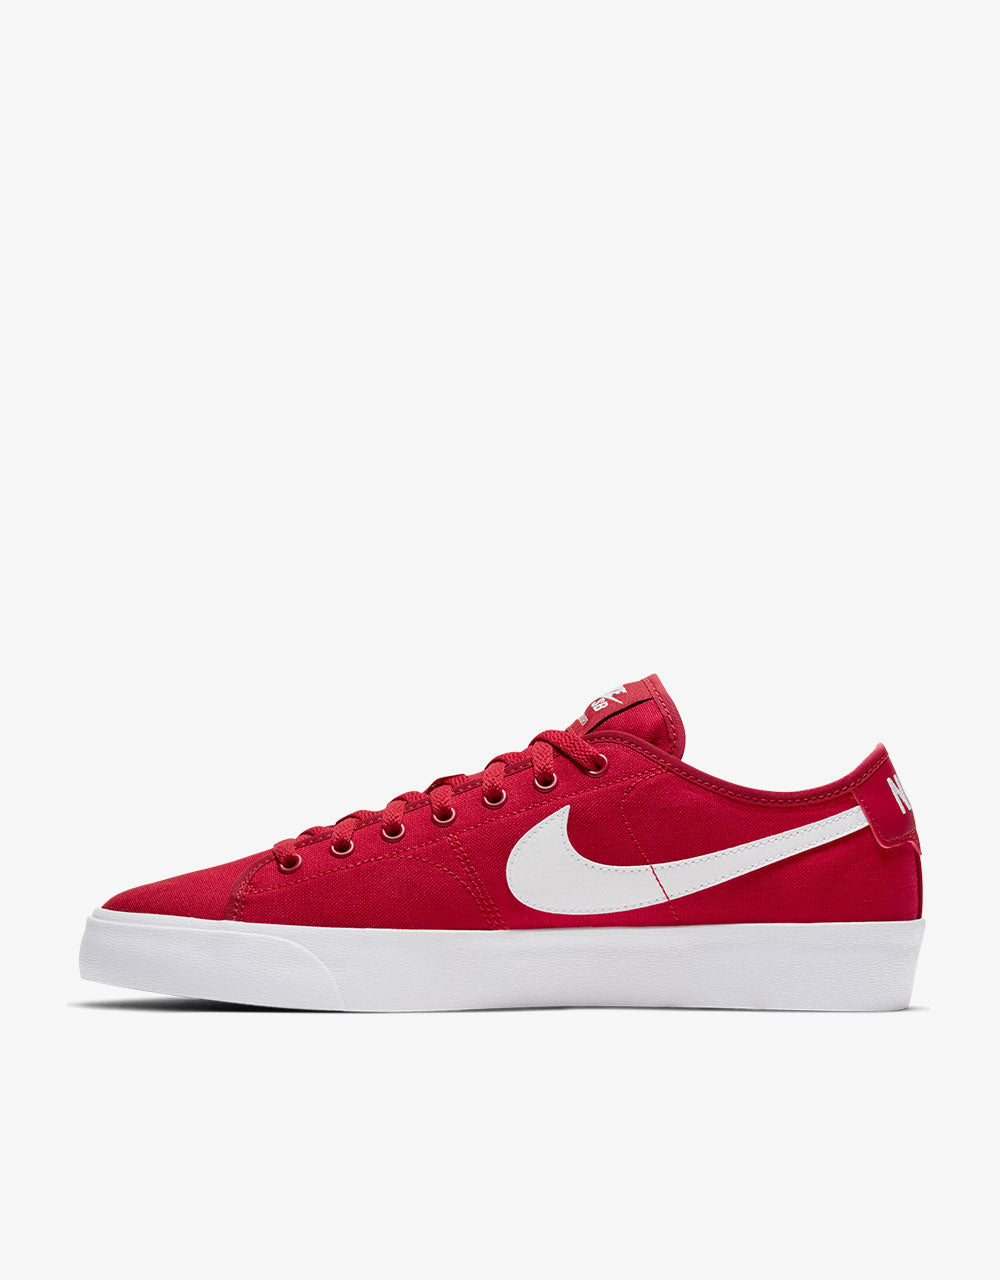 Nike SB BLZR Court Skate Shoes - Gym Red/White-Gym Red-Gum Light Brown